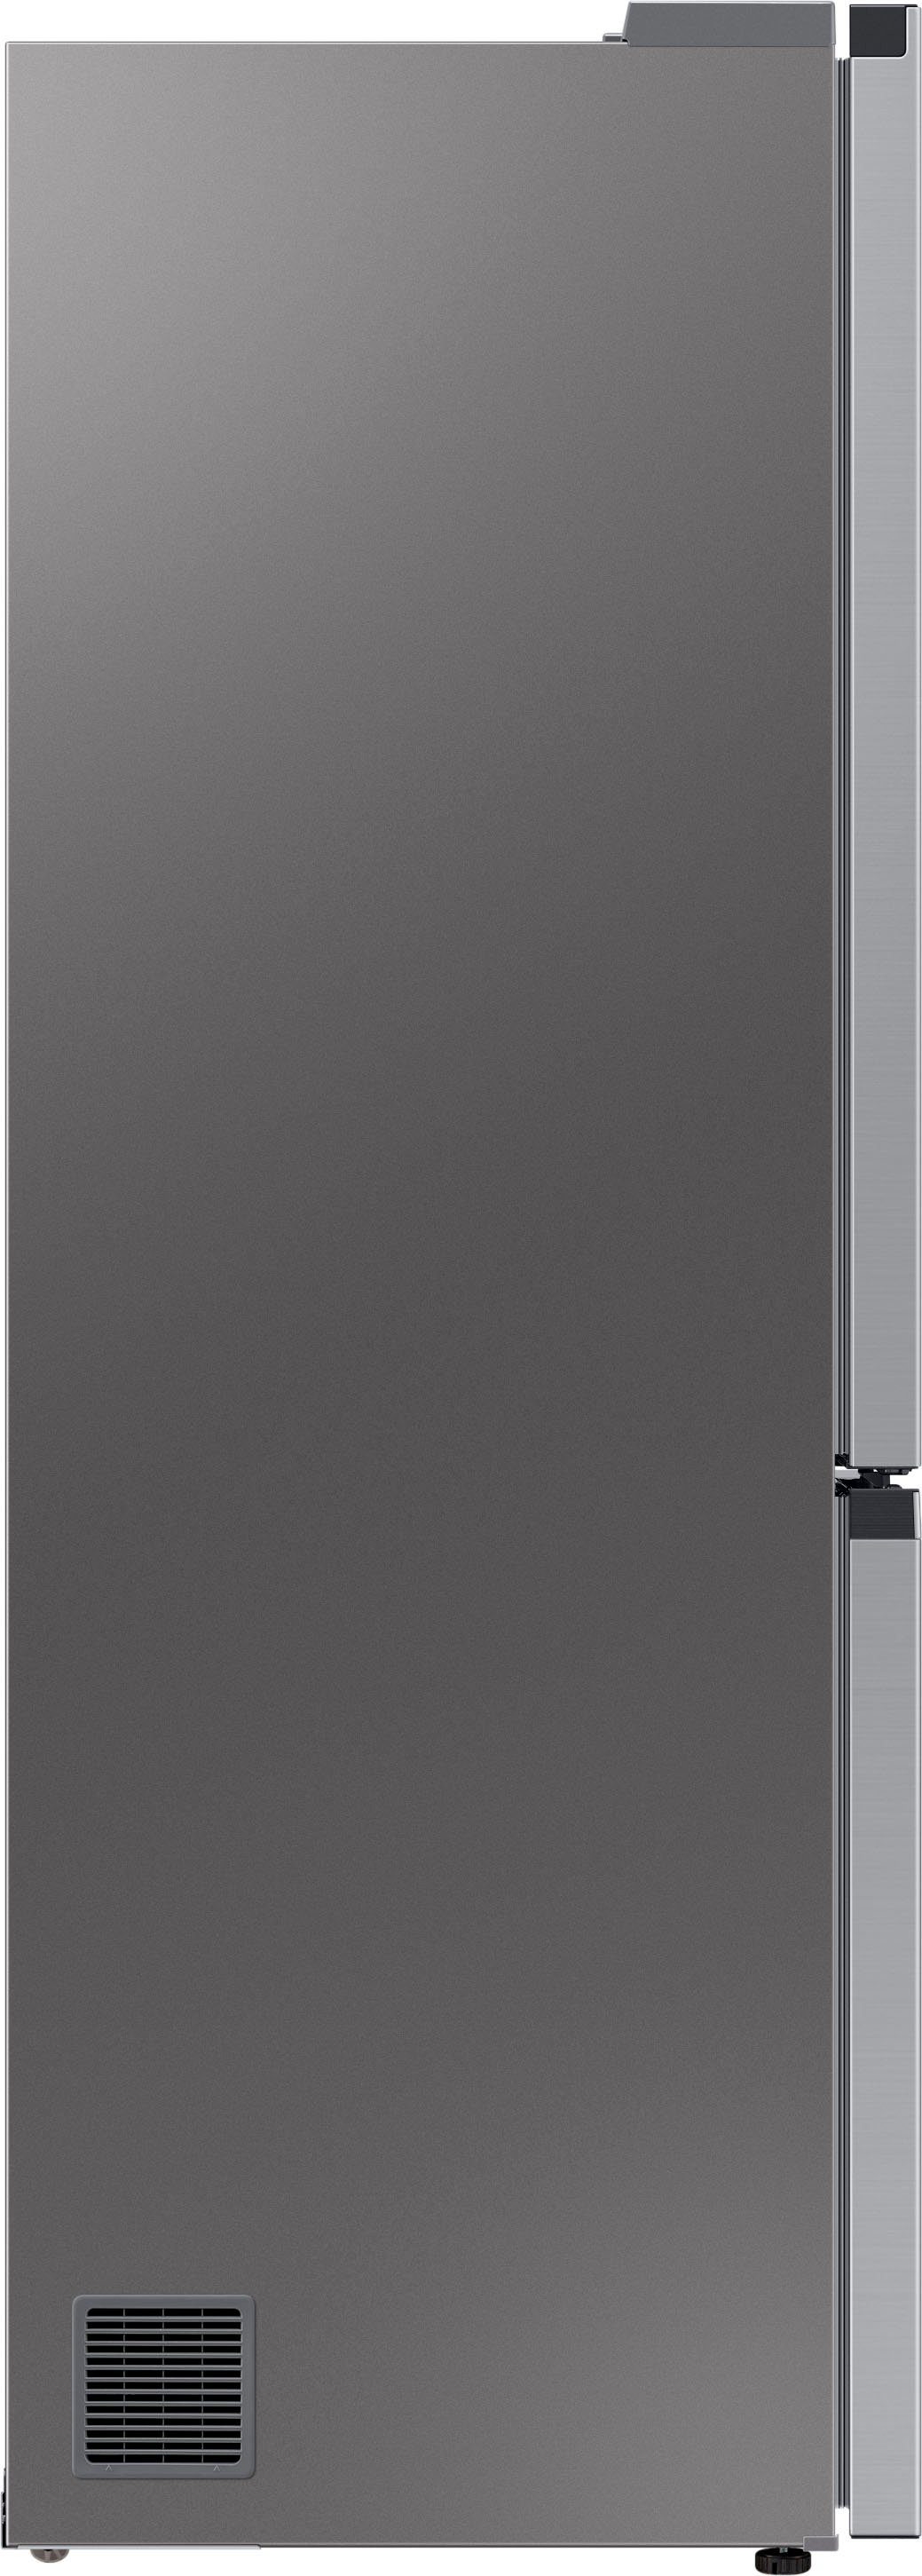 Samsung Kühl-/Gefrierkombination RL34T600CSA, 185,3 cm 59,5 breit optik edelstahl cm hoch